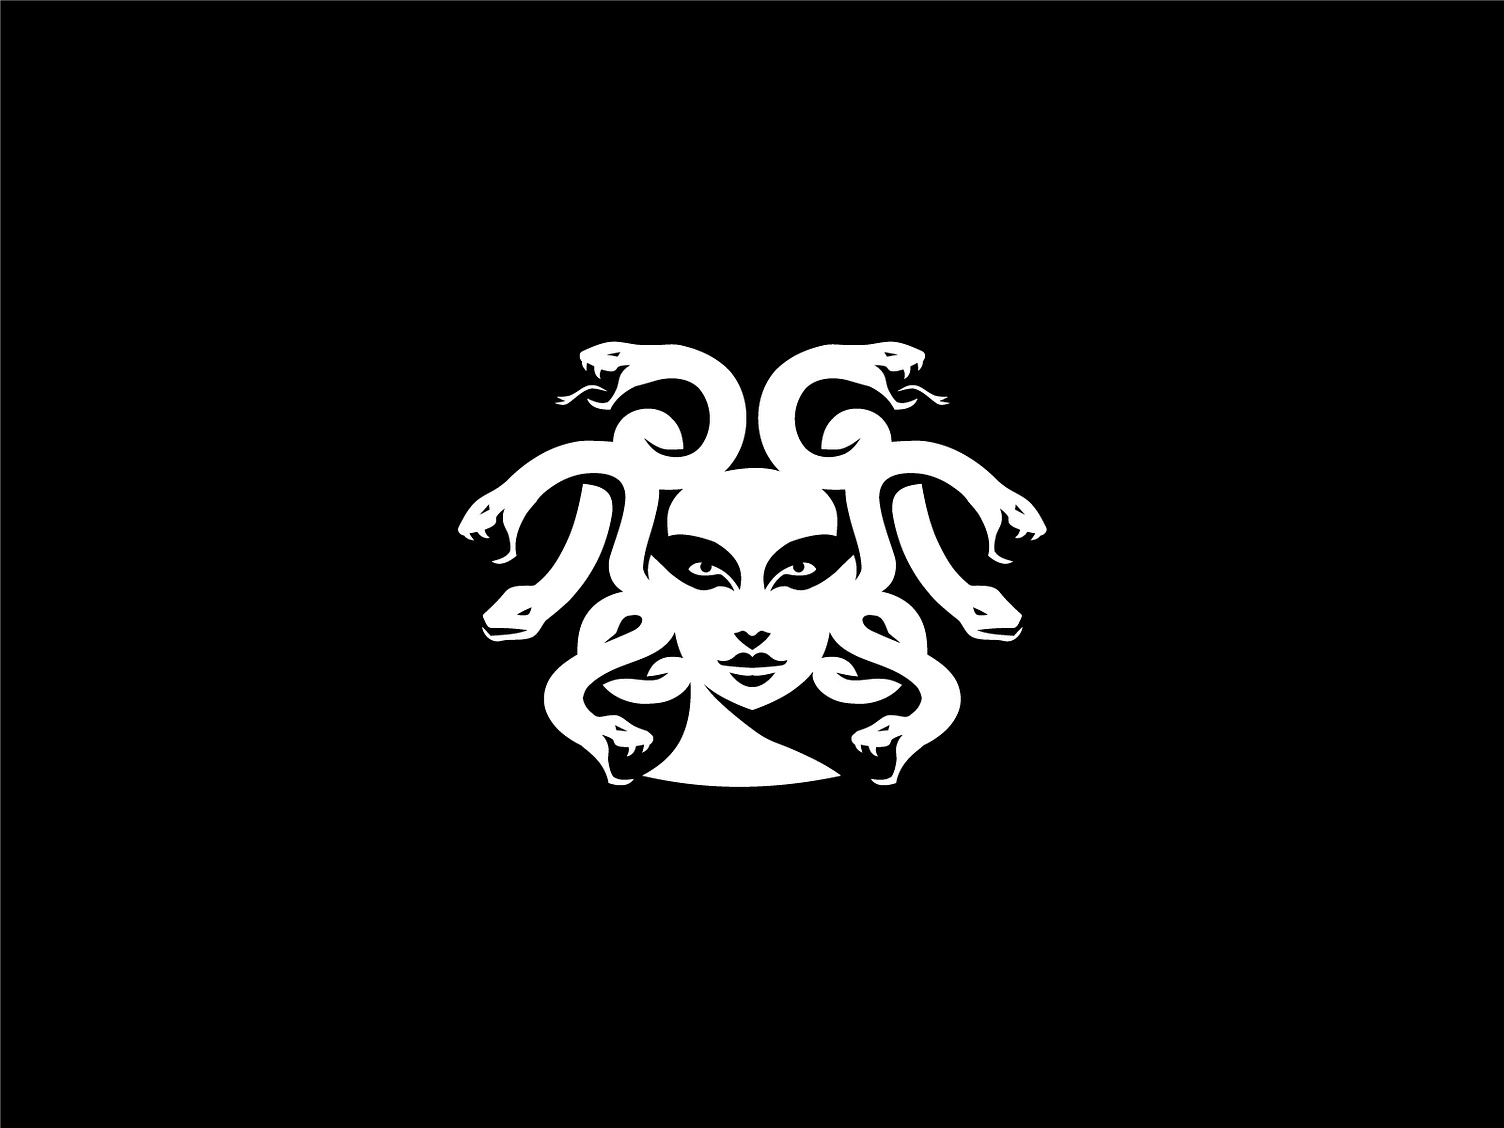 Medusa Logo by Numan Ilyas on Dribbble